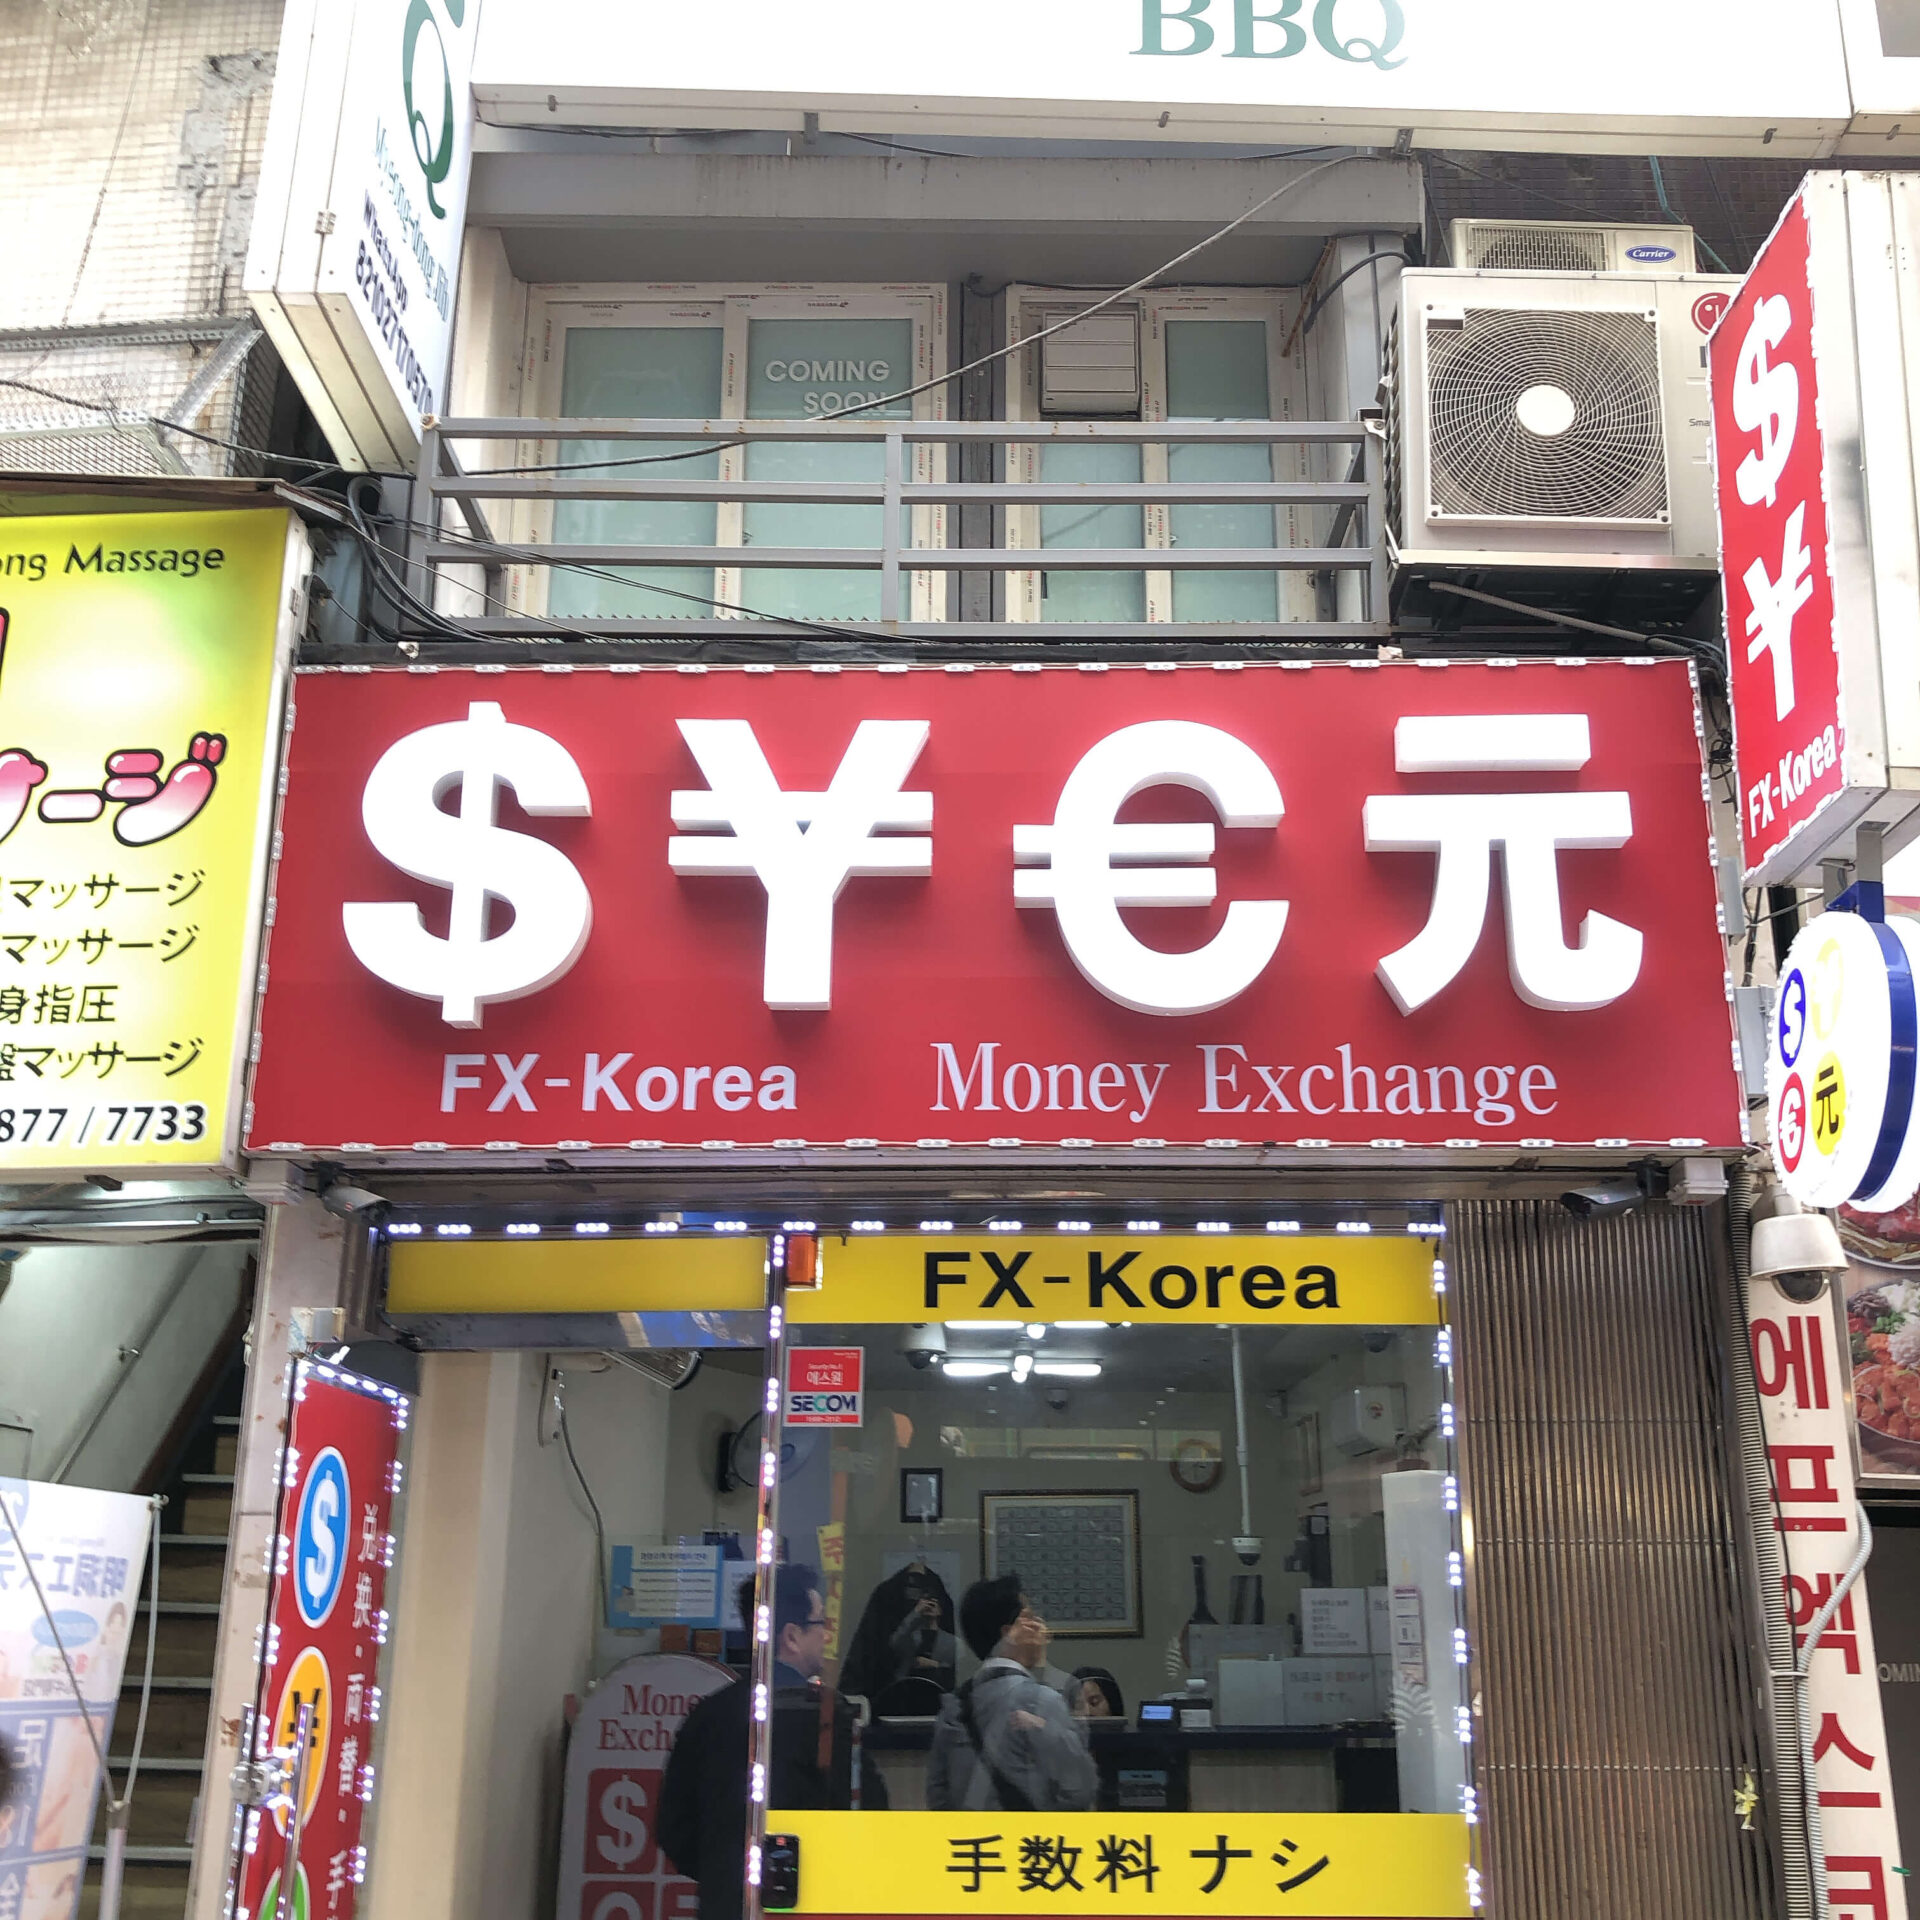 FX-Koreaの外観